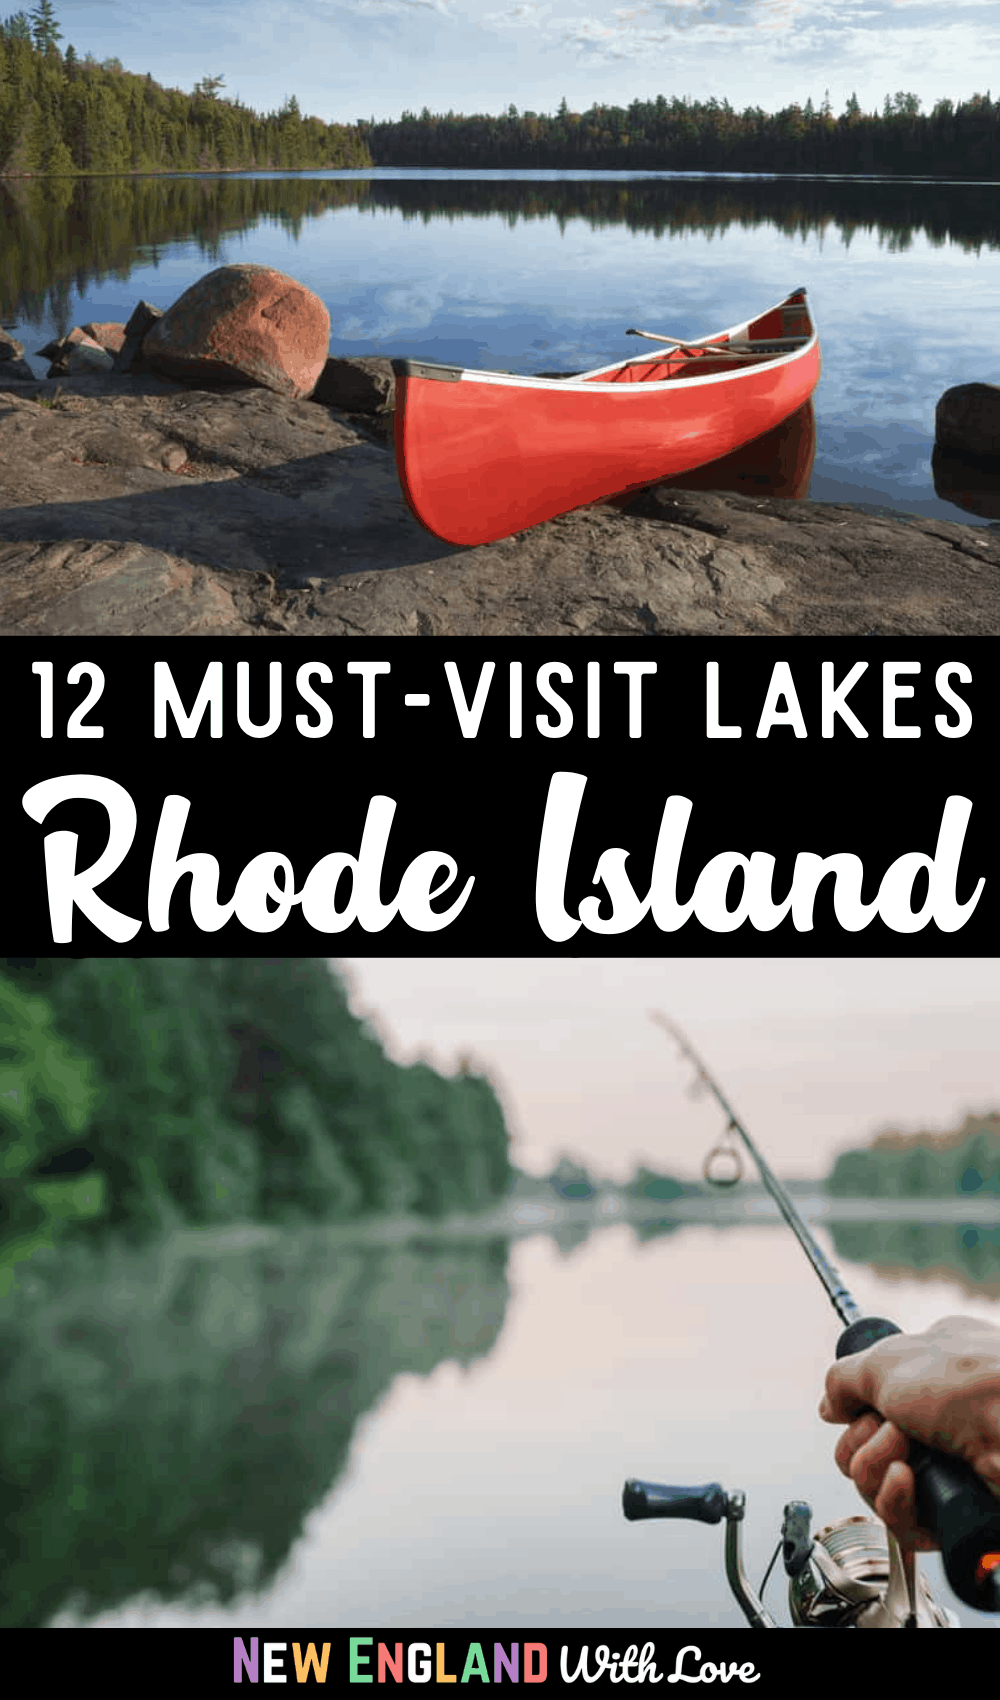 Pinterest graphic reading "12 MUST-VISIT LAKES Rhode Island"